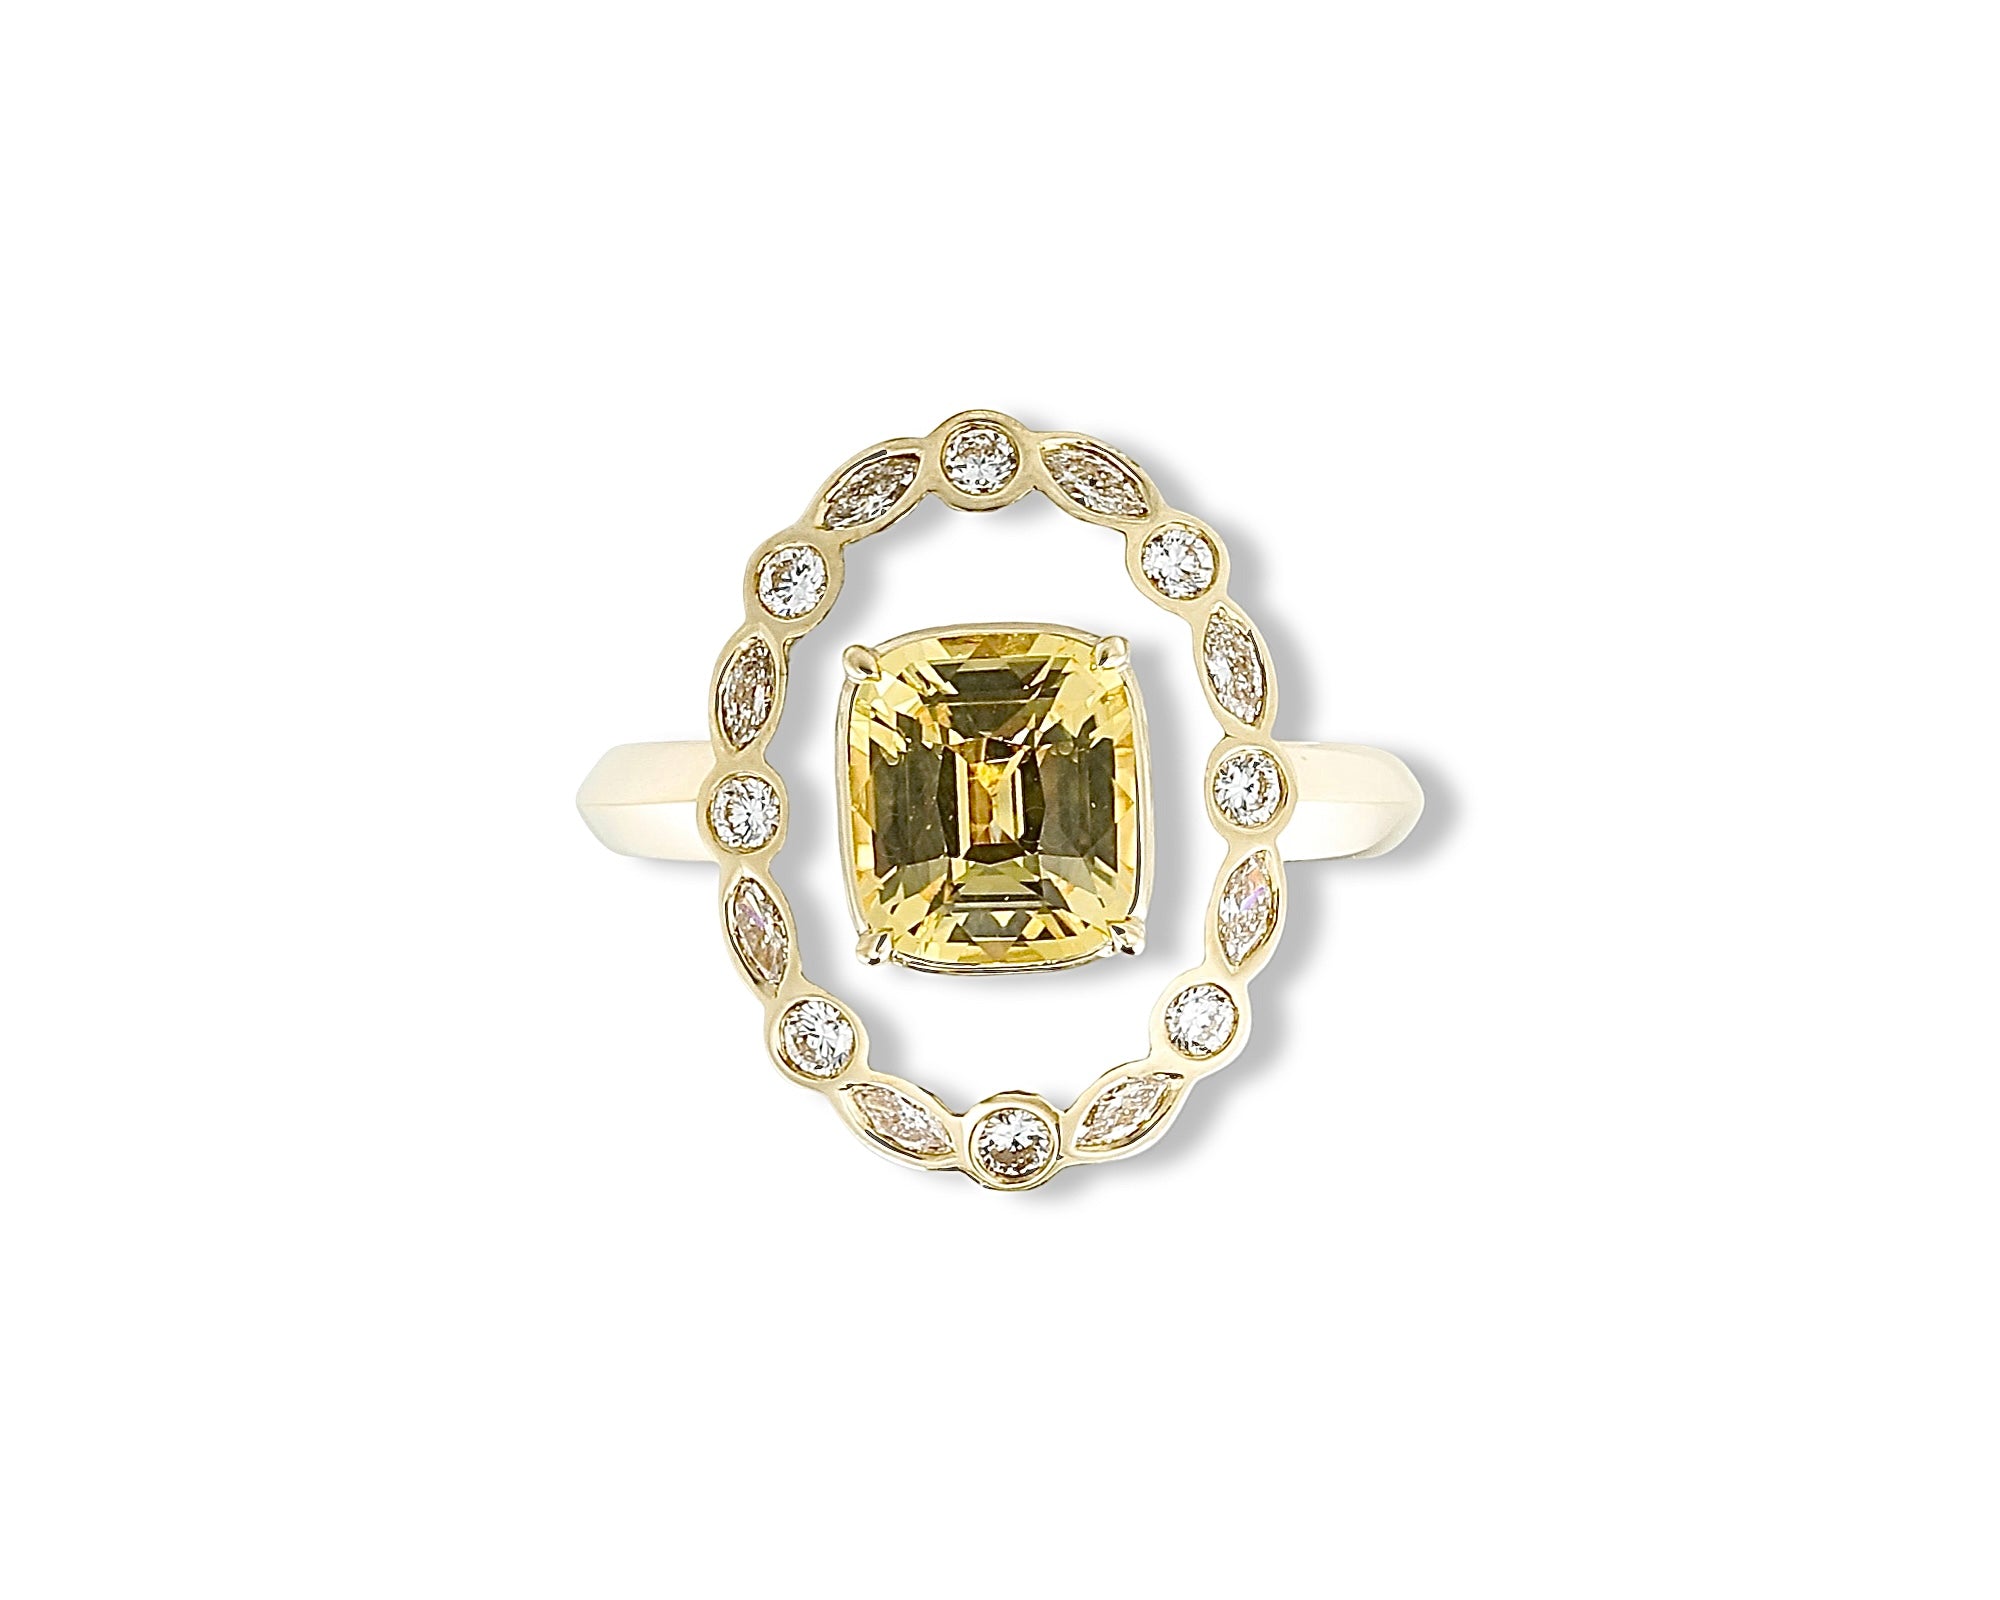 Canary Vintage Enamel Ring